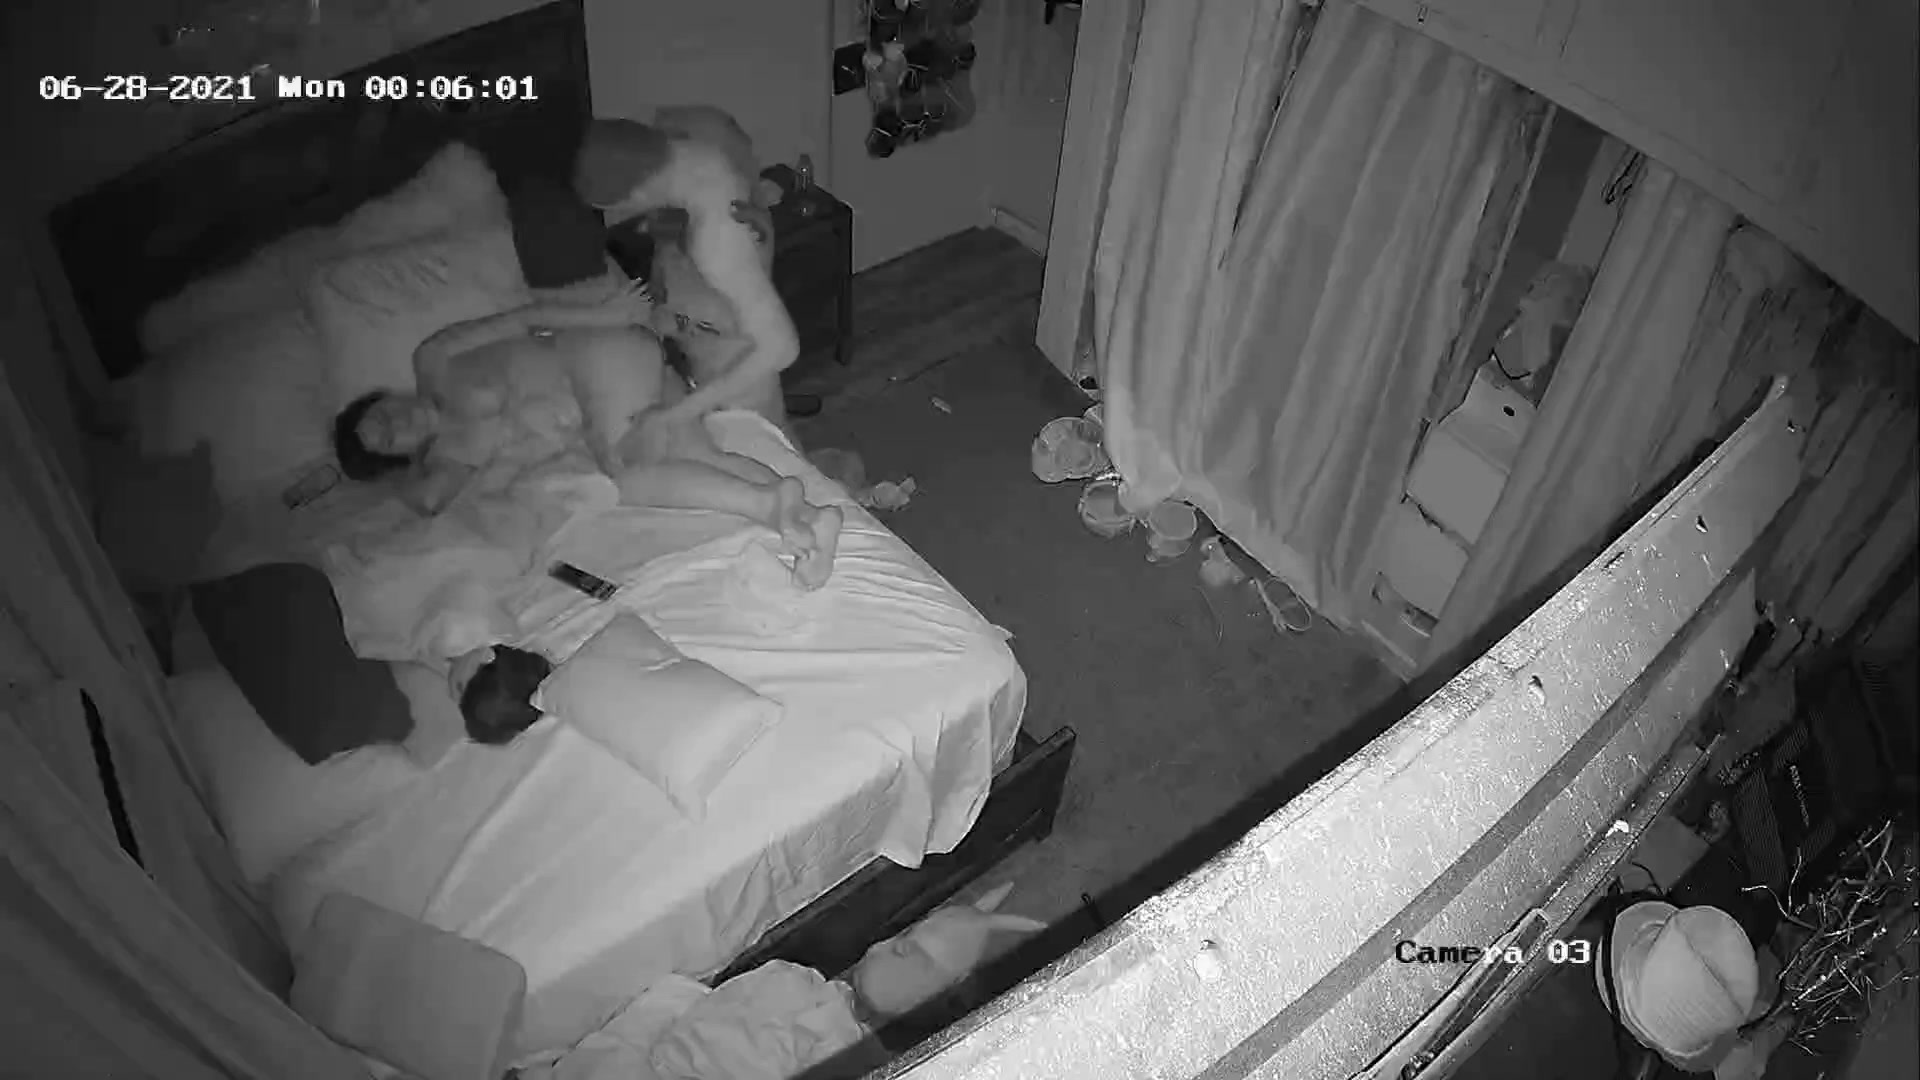 My Girlfriend's Amazing Parents Fuck Hard In Their Bed Hidden Ip Camera